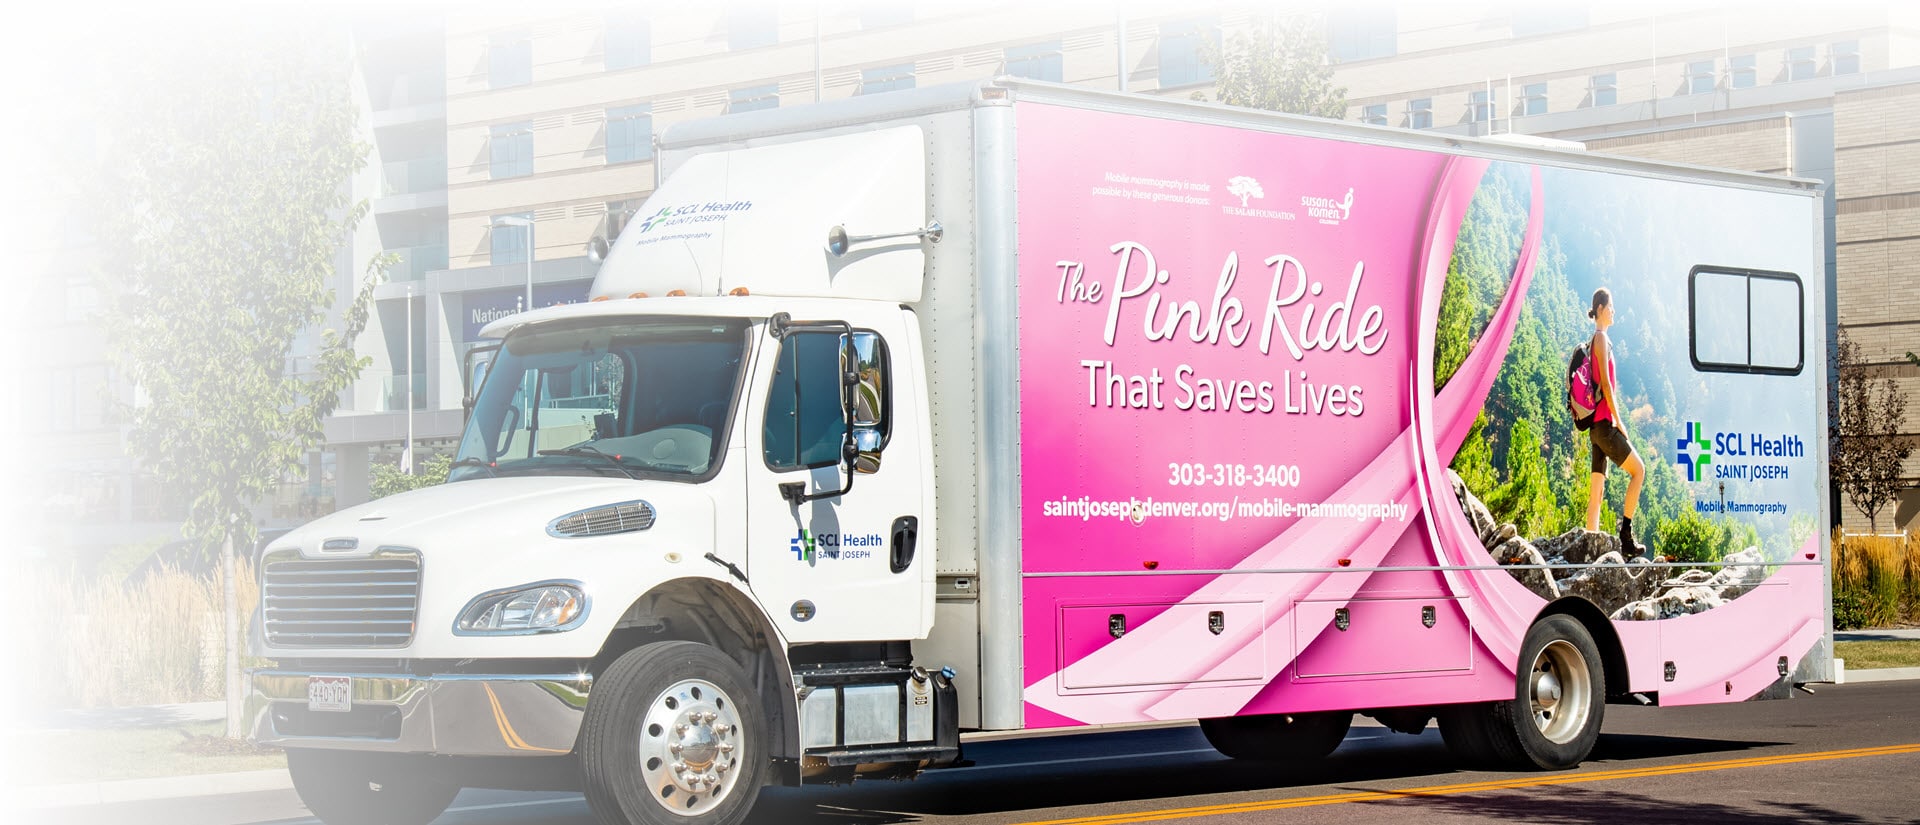 Saint Joseph Mobile Mammography Van